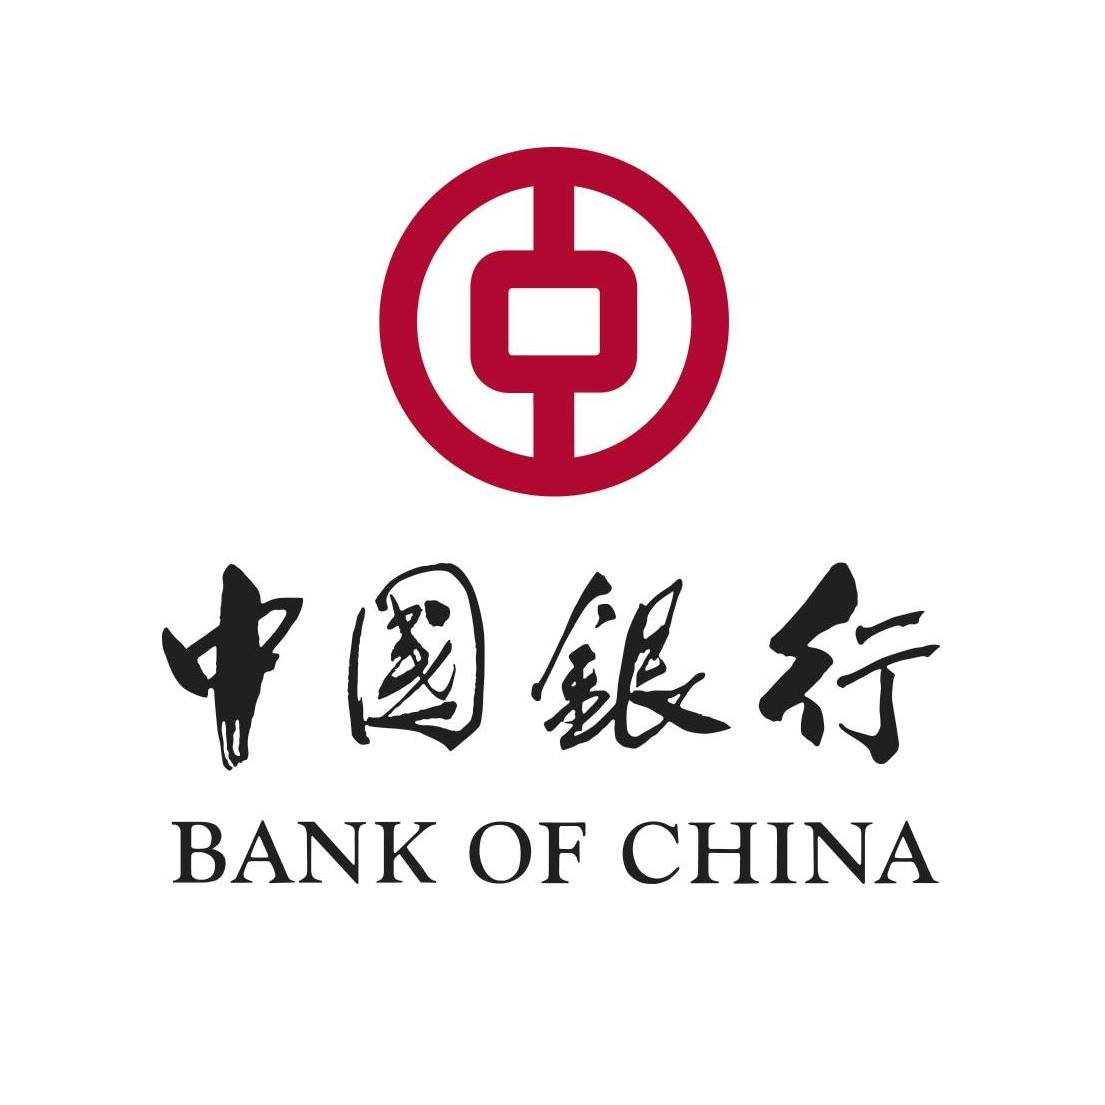 Bank of China Ltd. Logo